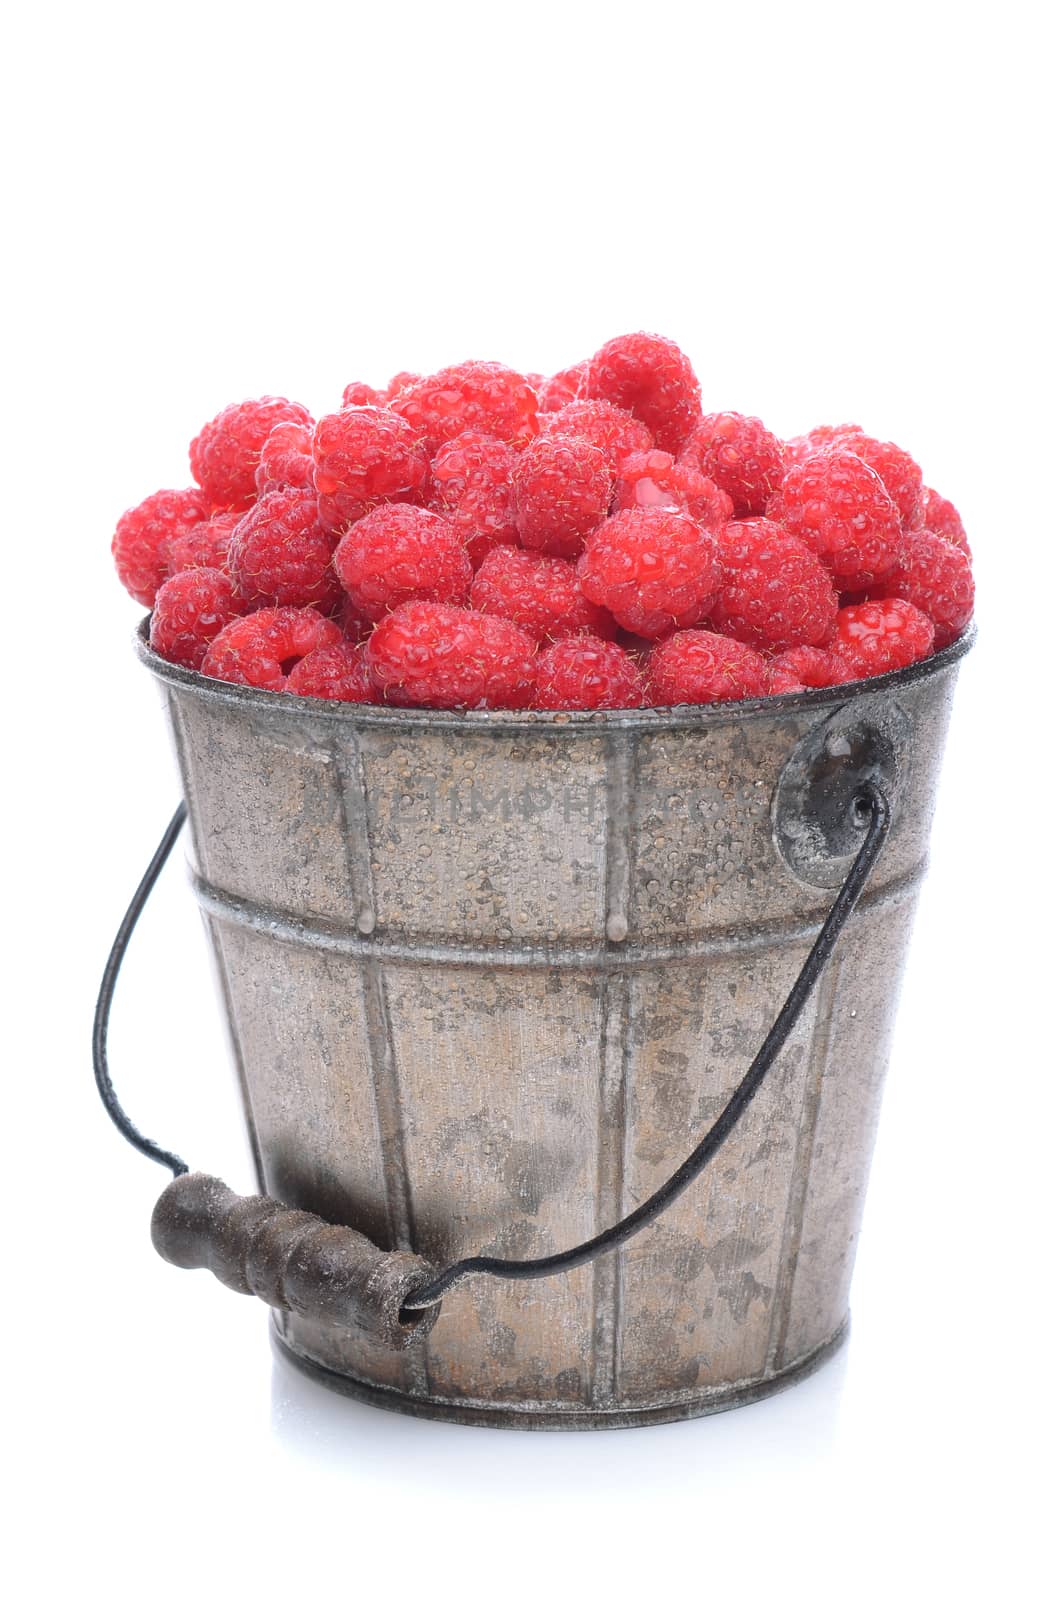 Pail of Fresh Picked Raspberries by sCukrov